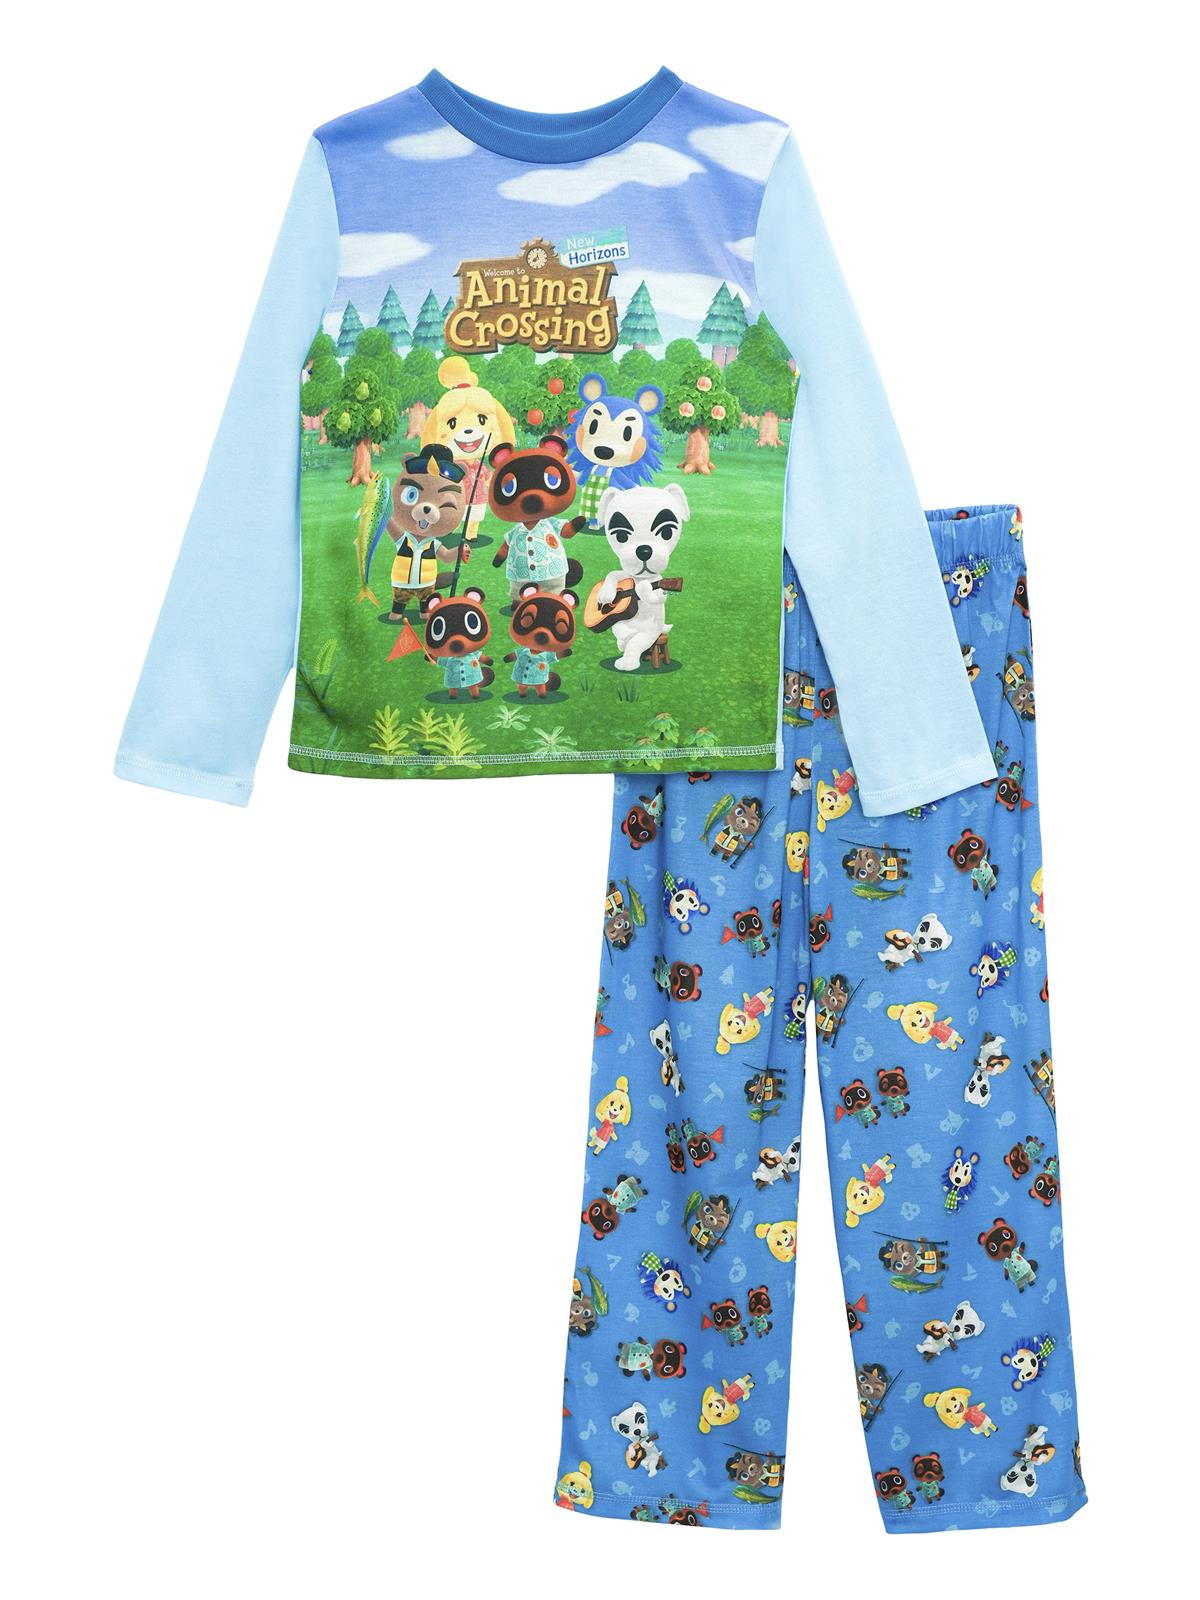 Sleep On It Toddler Boys 3-pc. Pajama Set